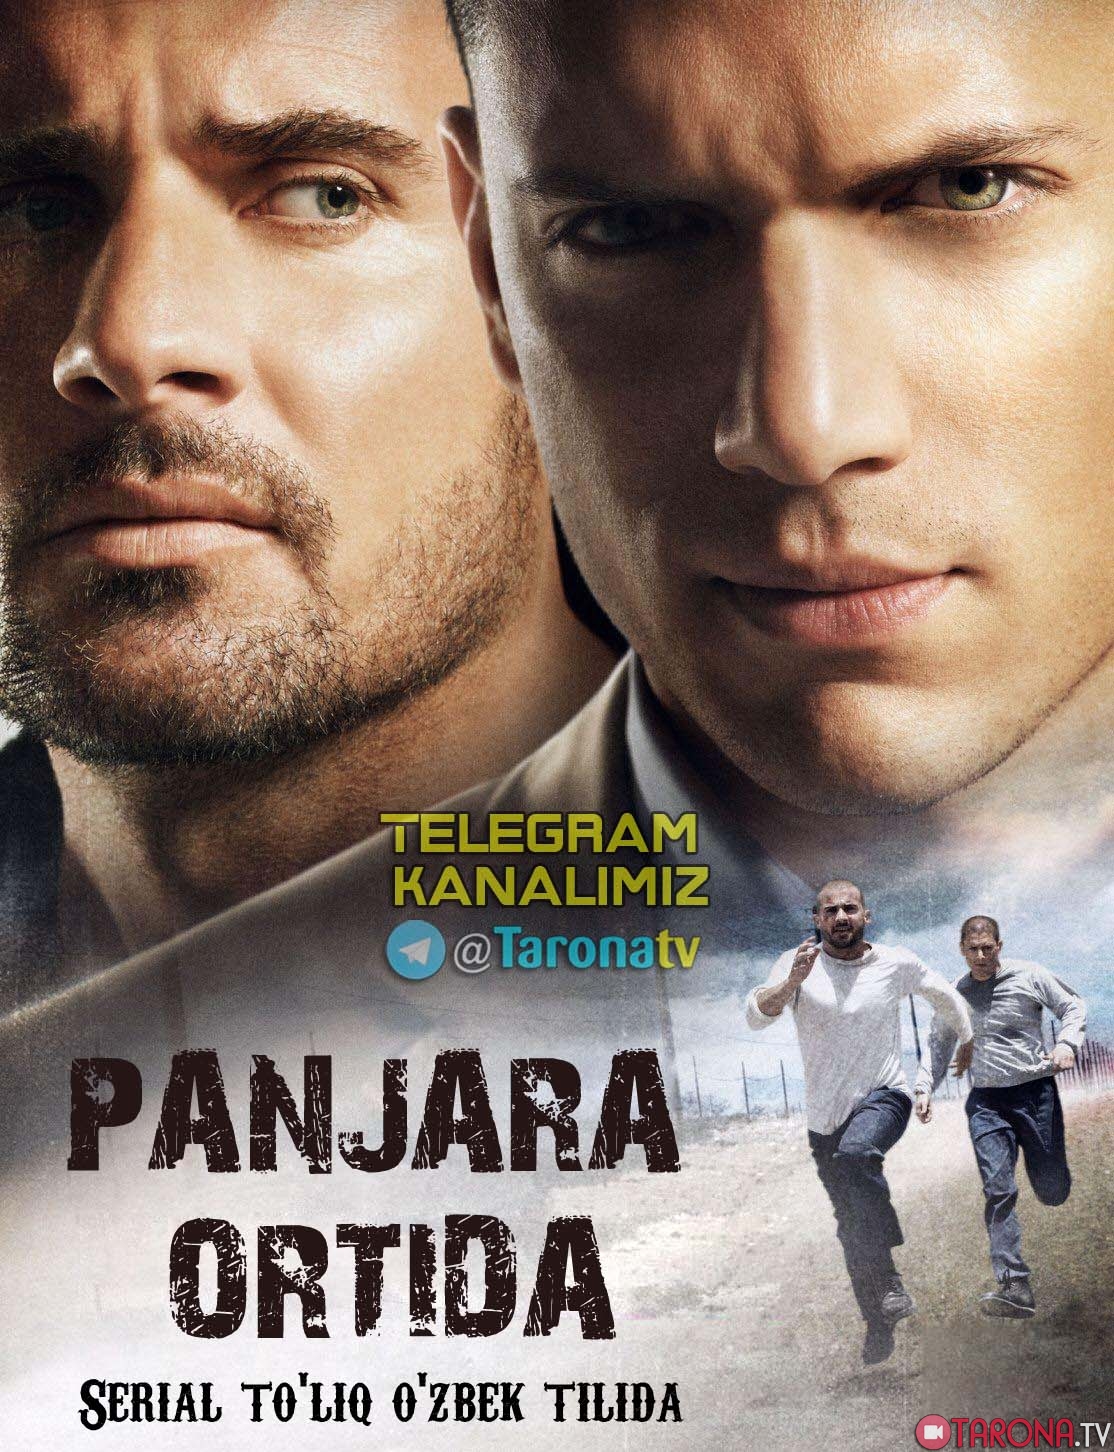 PANJARA ORTIDA (Serial, To'liq O’zbek tilida) HD